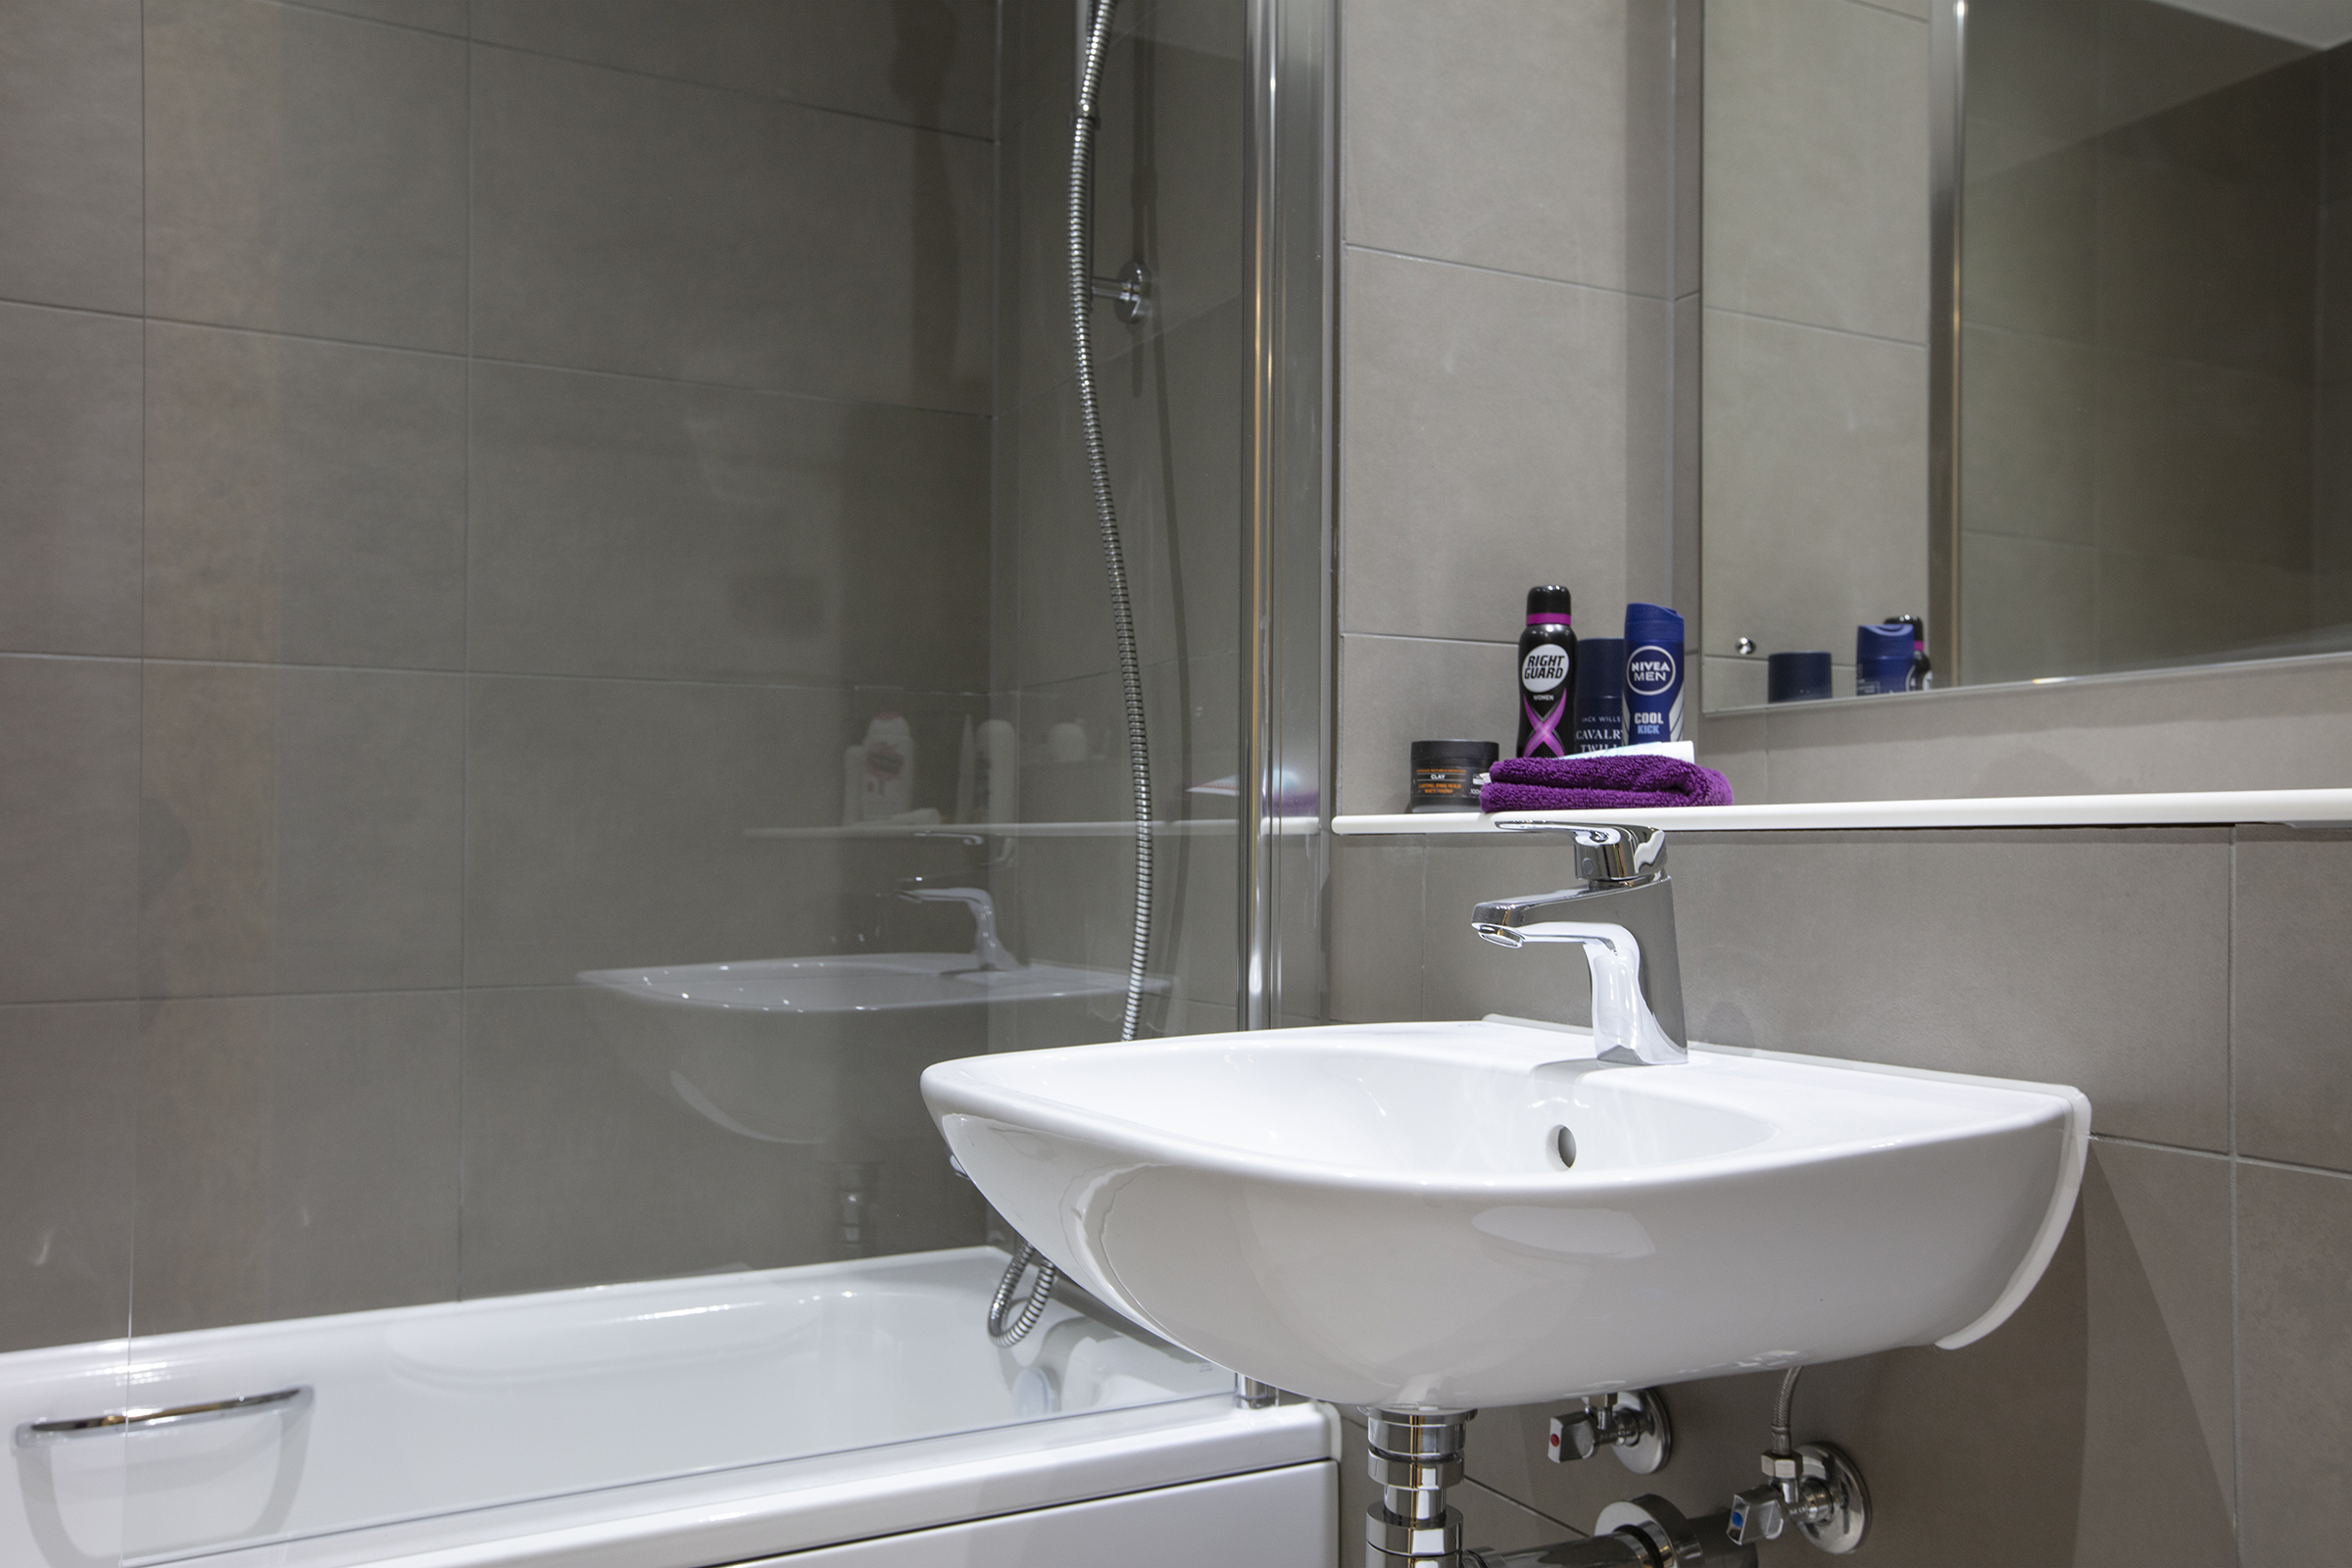 WILLMOTT DIXON AWARDS £3.5M BATHROOM POD CONTRACTS TO OFFSITE SOLUTIONS FOR BIRMINGHAM REGENERATION SCHEME @bathroompod